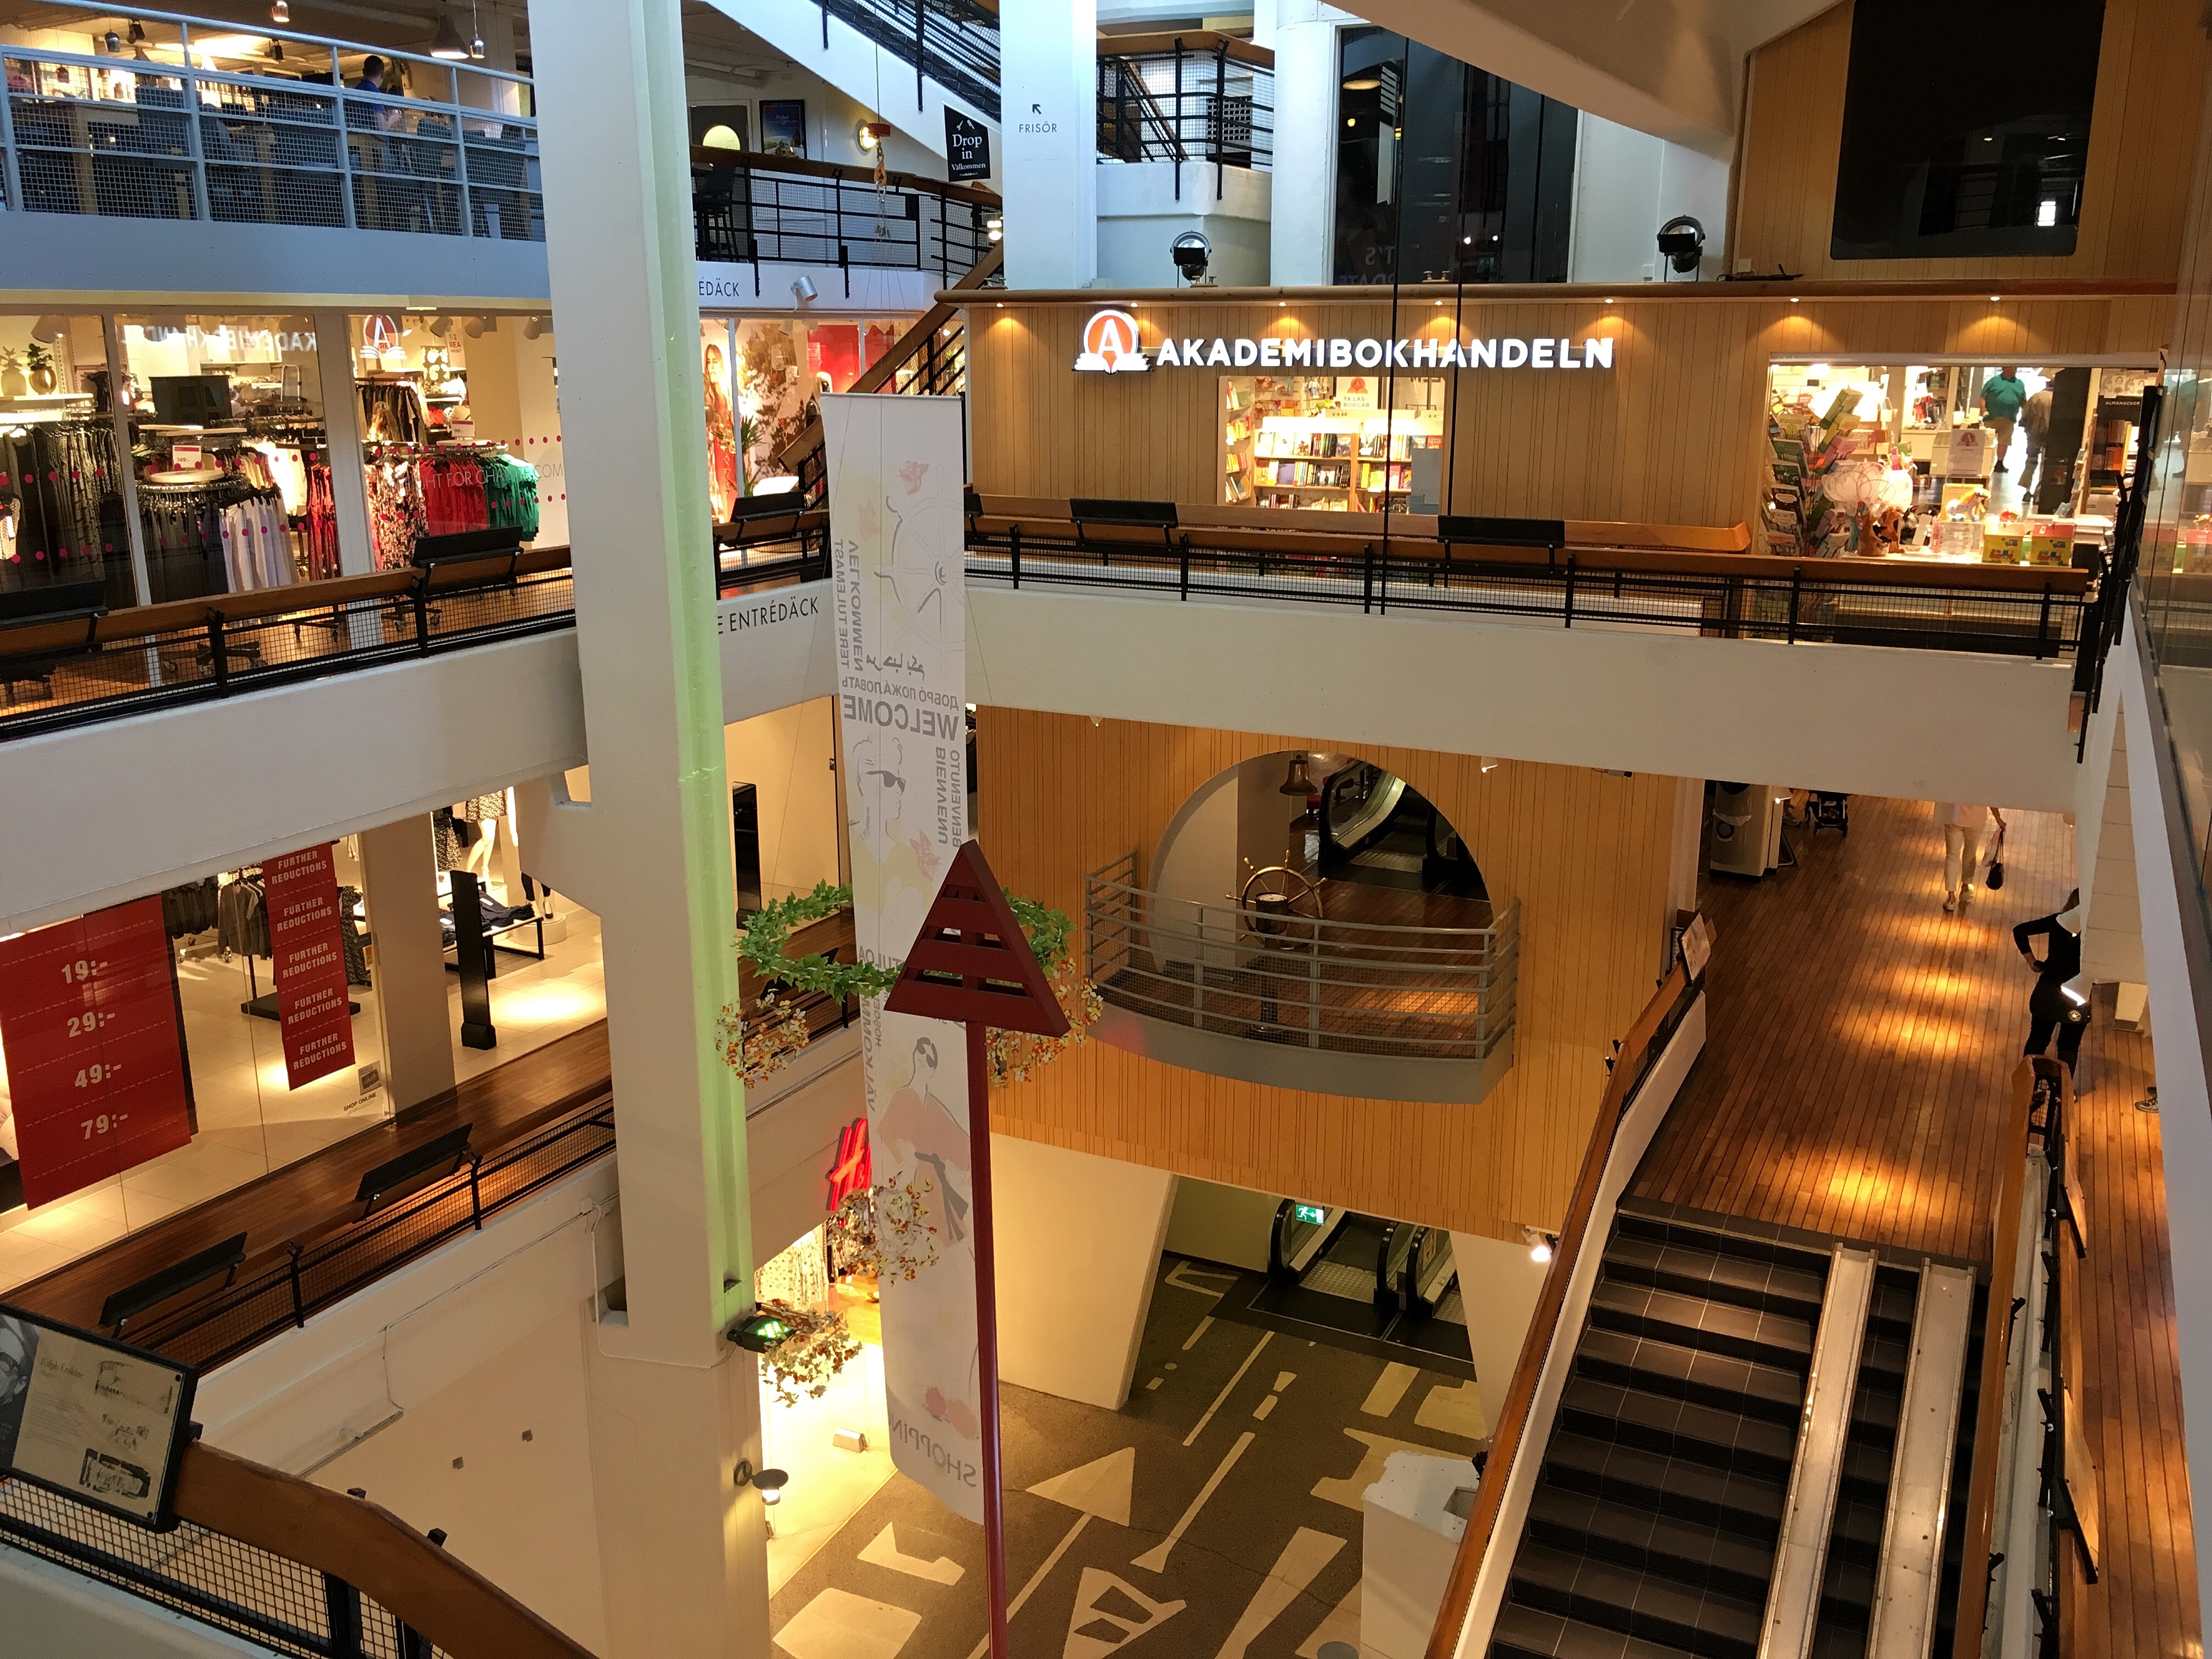 One shopping center. Торговый центр Эвер Хабаровск. Multi Magic Mall. Mall of Scandinavia. Innerstaden.